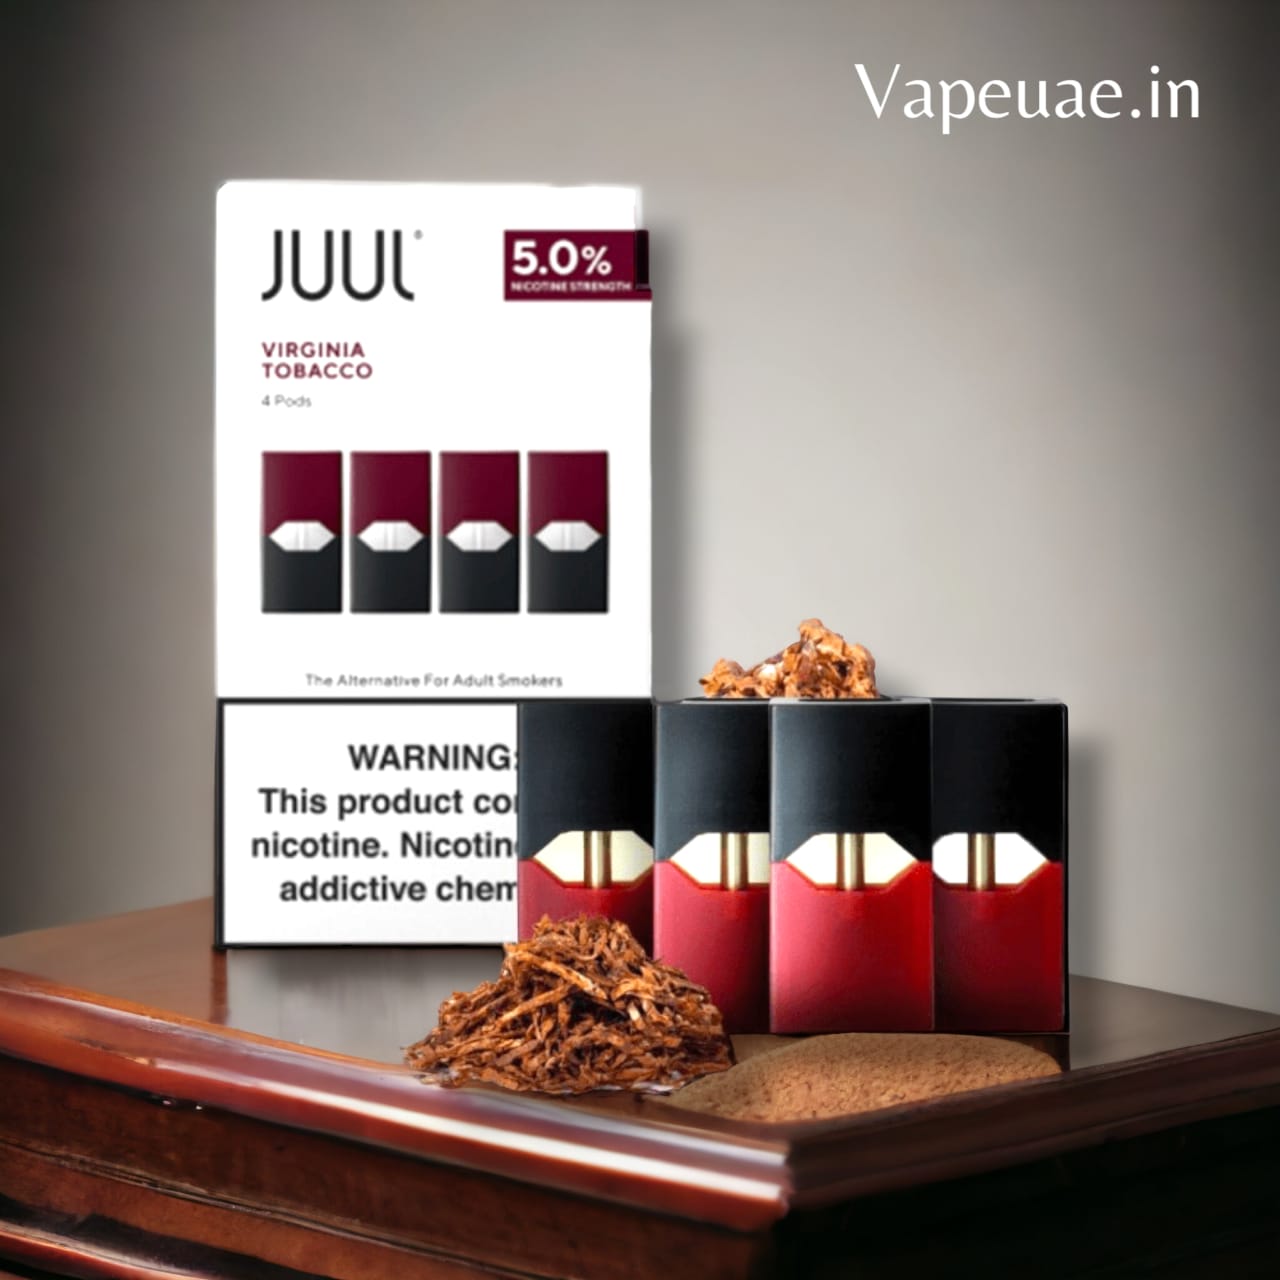 JUUL Virginia Tobacco Pods (4)